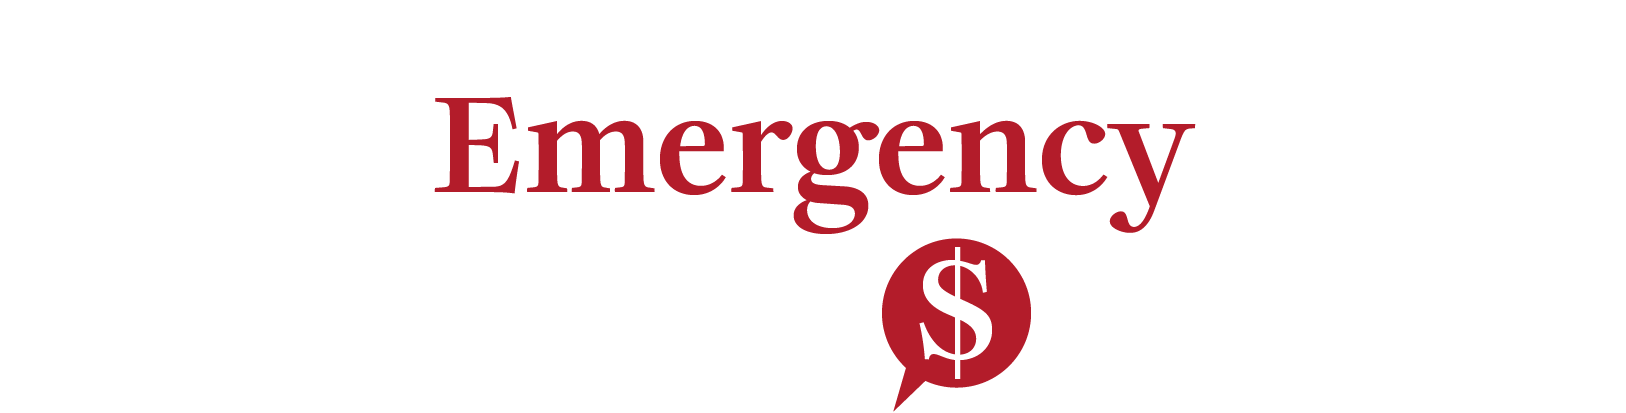 Emergency Cash Bubble Briefing logo 